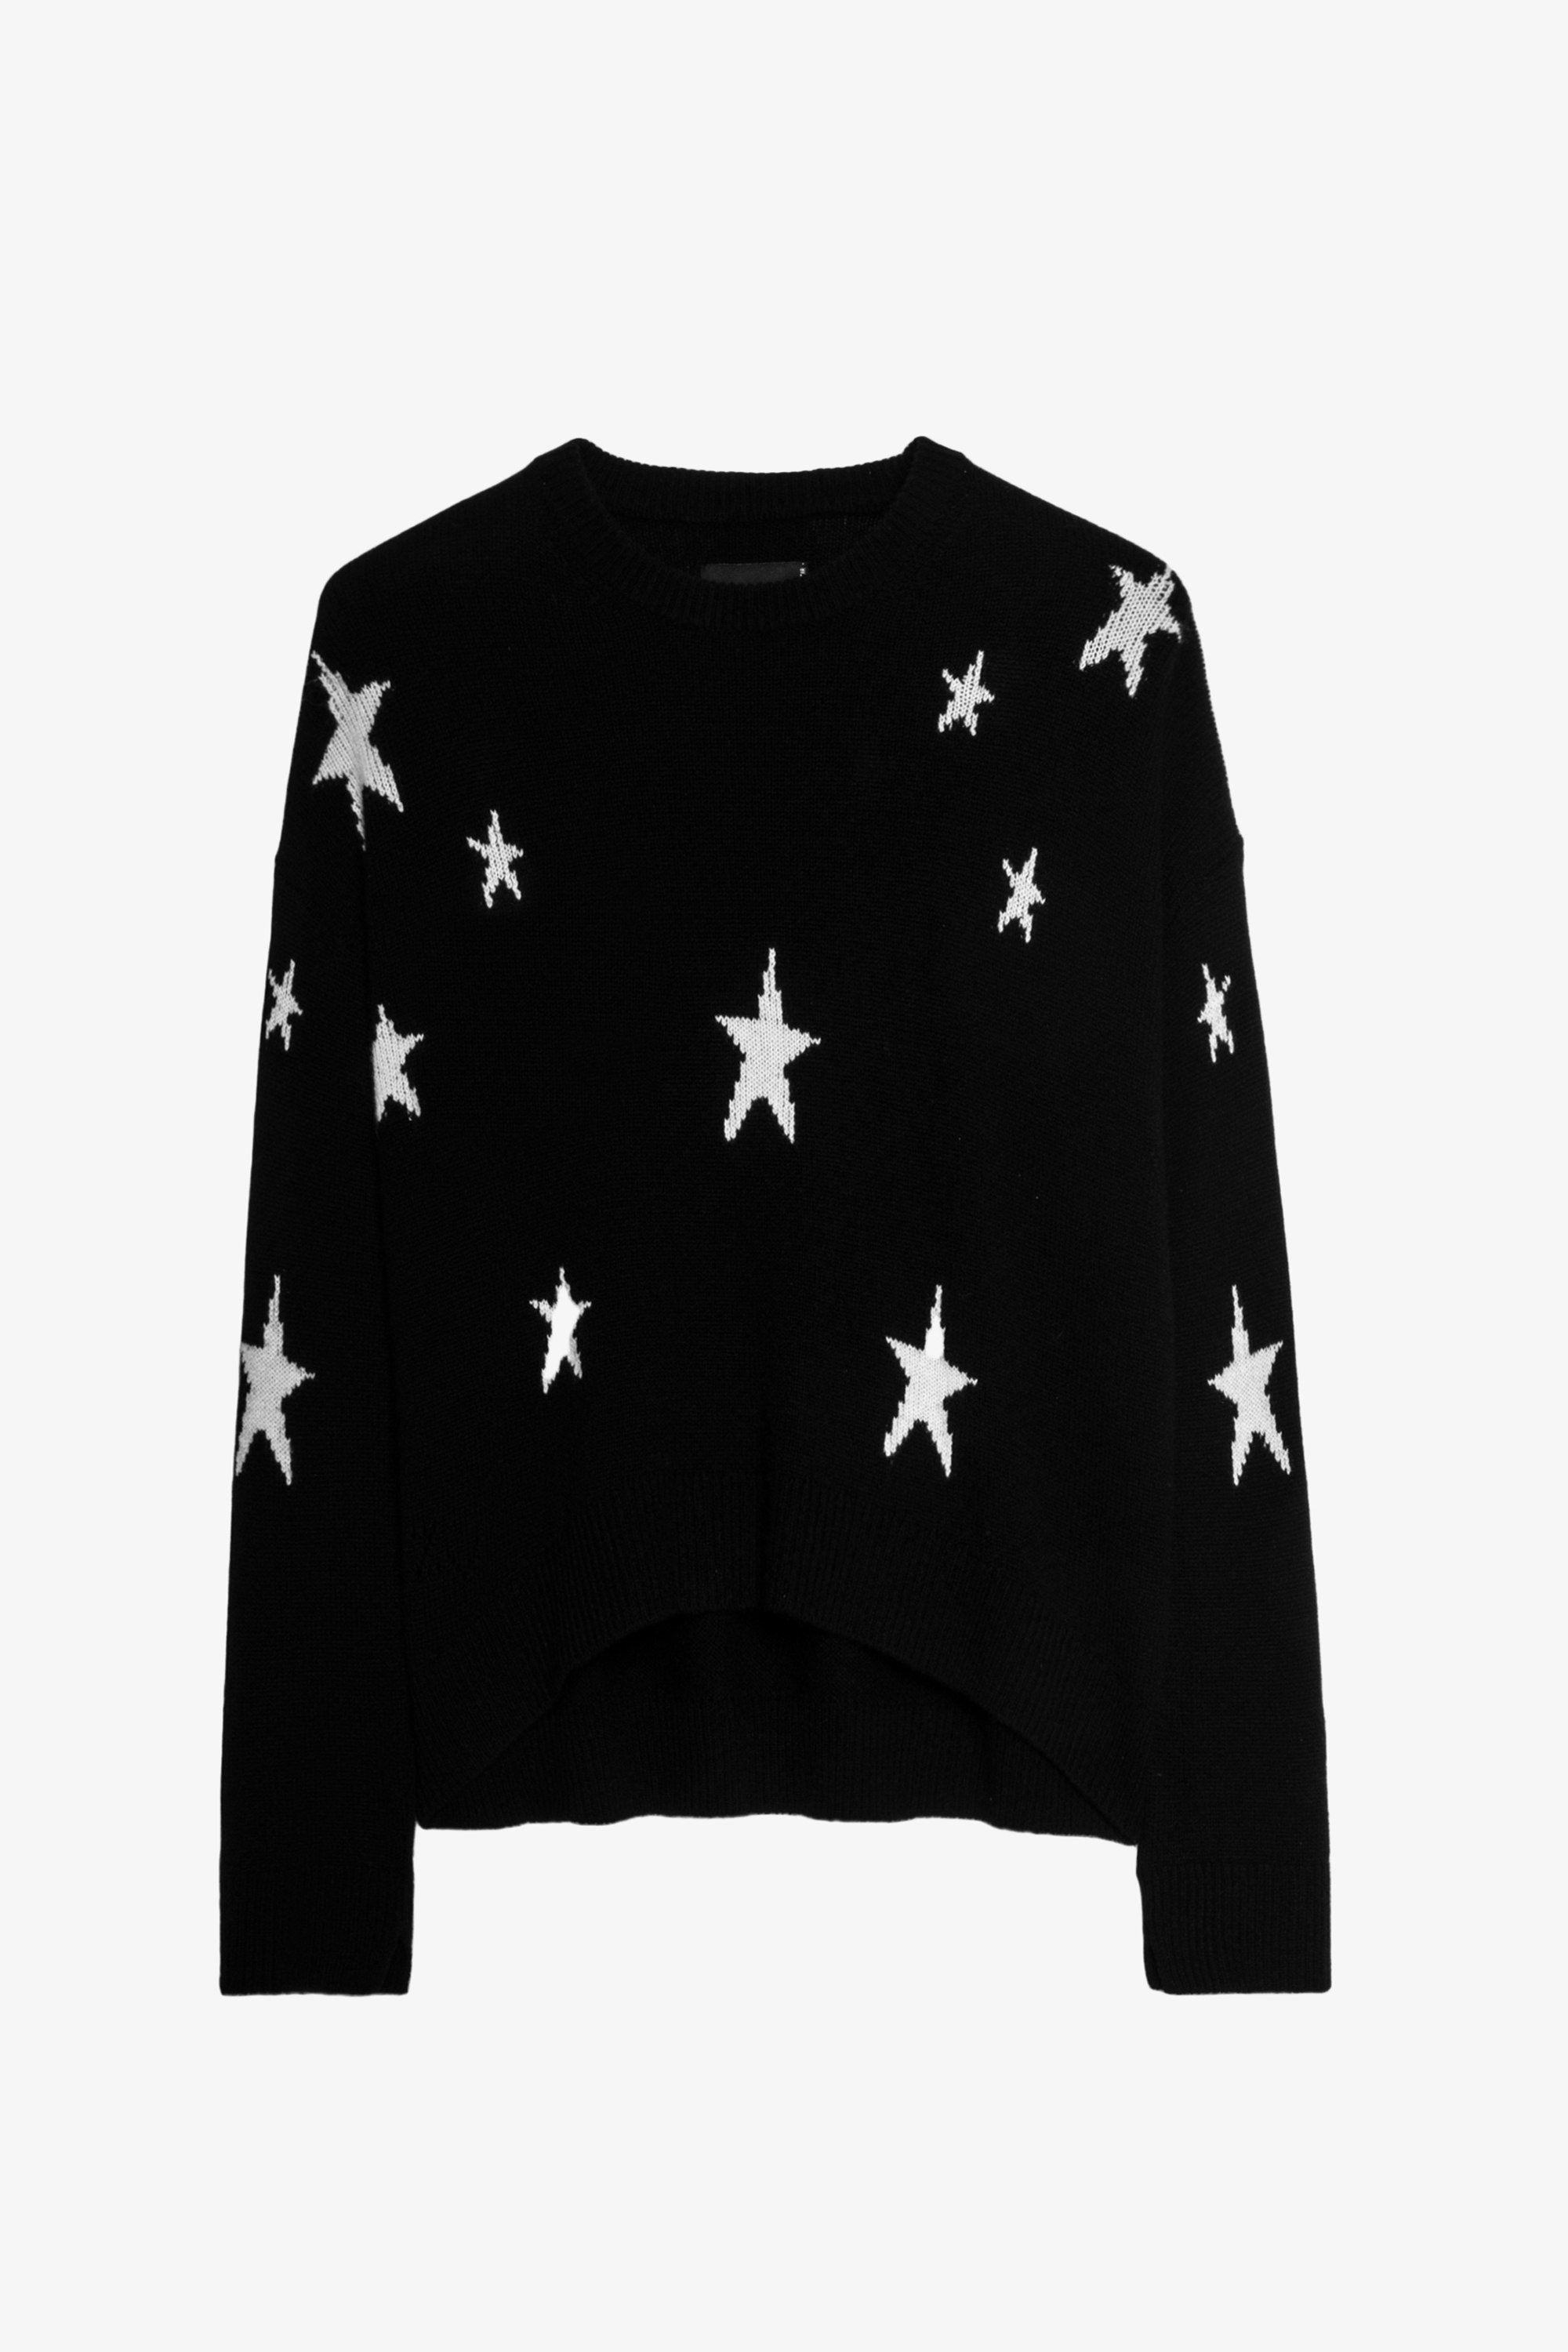 Markus Stars Cashmere Sweater - Cashmere sweater with motif.